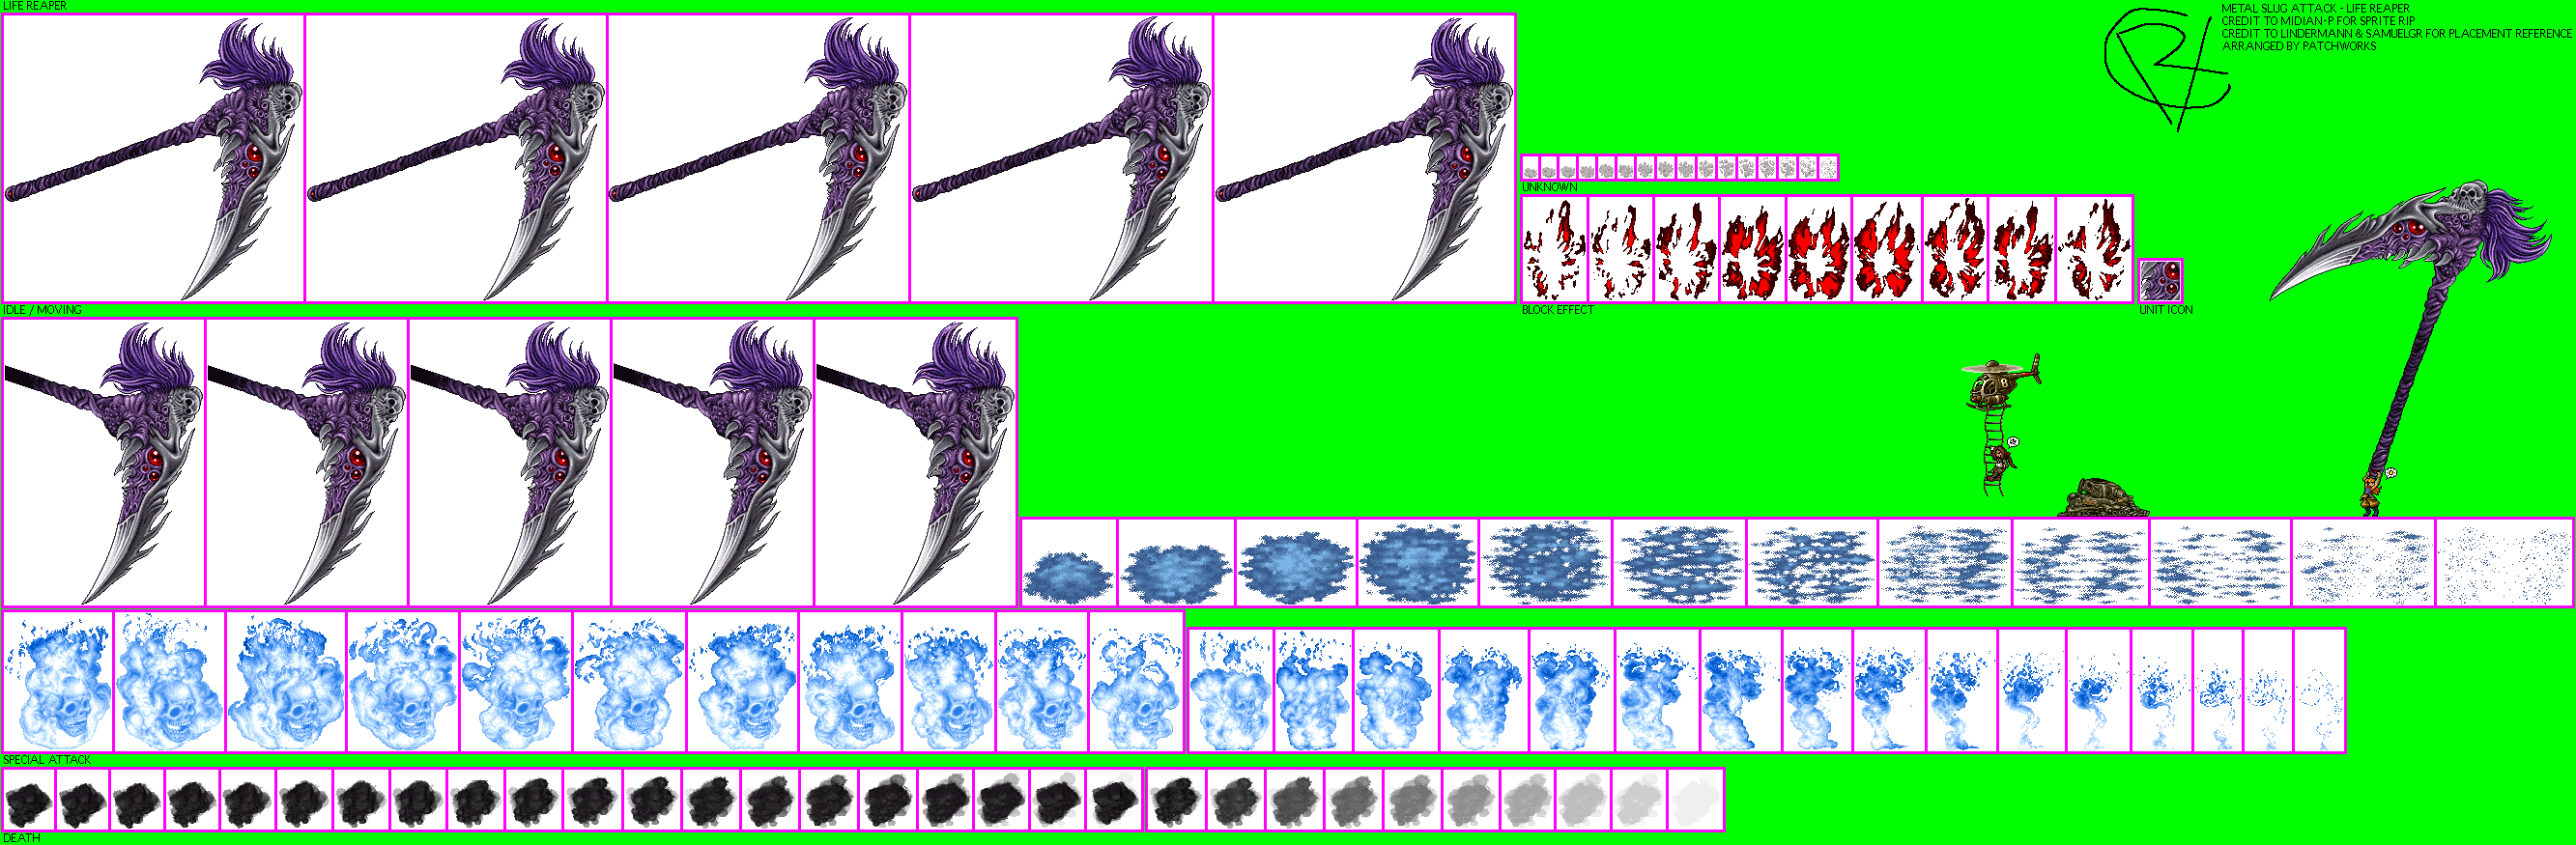 Metal Slug Attack - Life Reaper